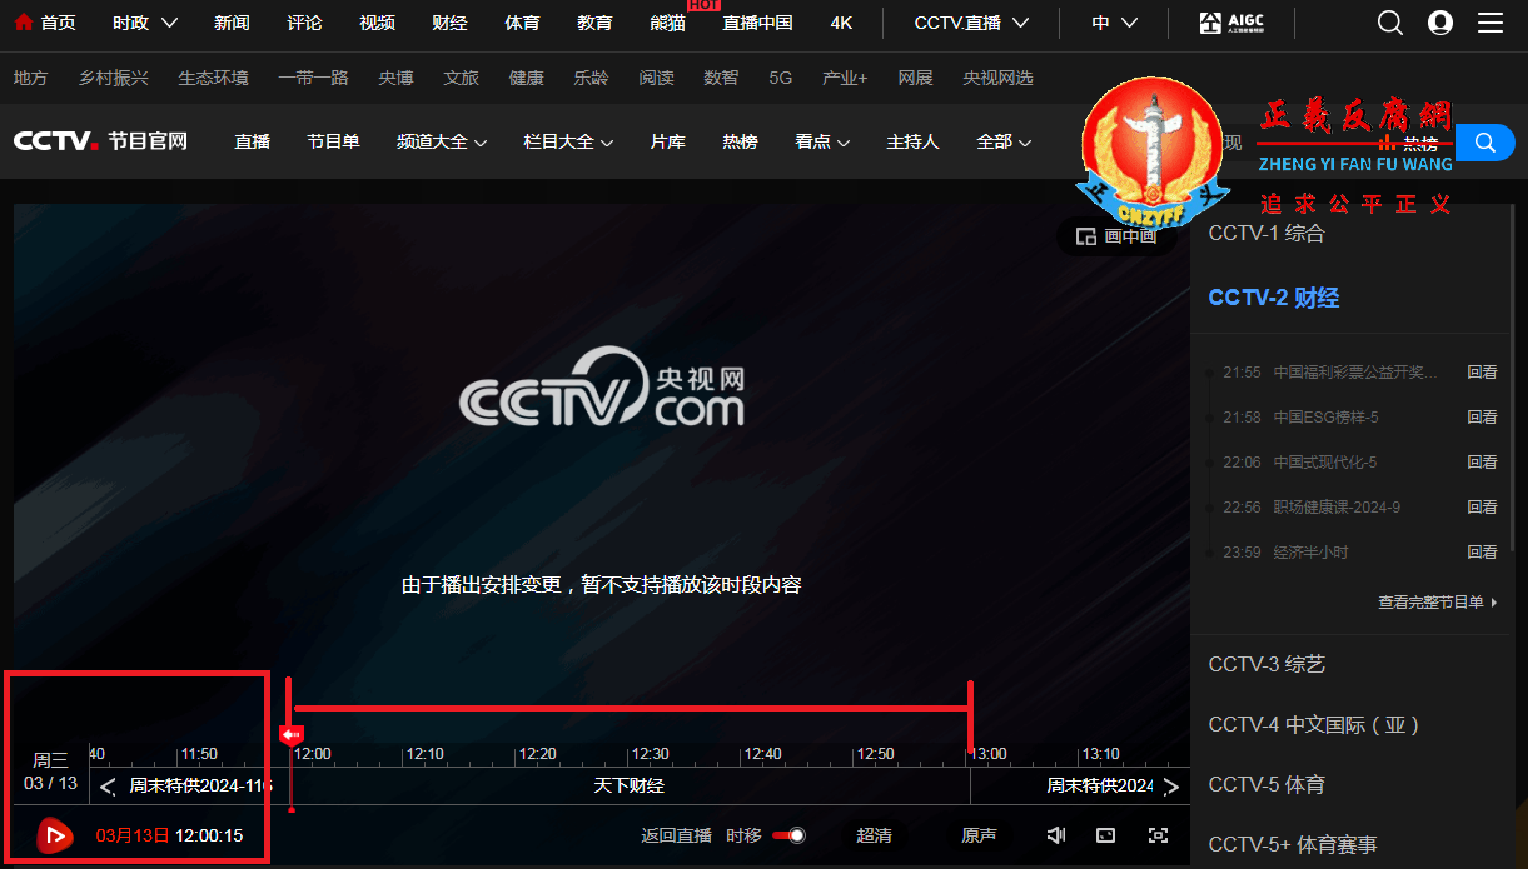 CCTV-2财经频道《天下财经》节目连线直播河北燕郊爆炸现场情况，该3月13日直播1200-1300时间段内容显示“由于播出安排变更，暂不支持播放该时段内容”已被删除。.png